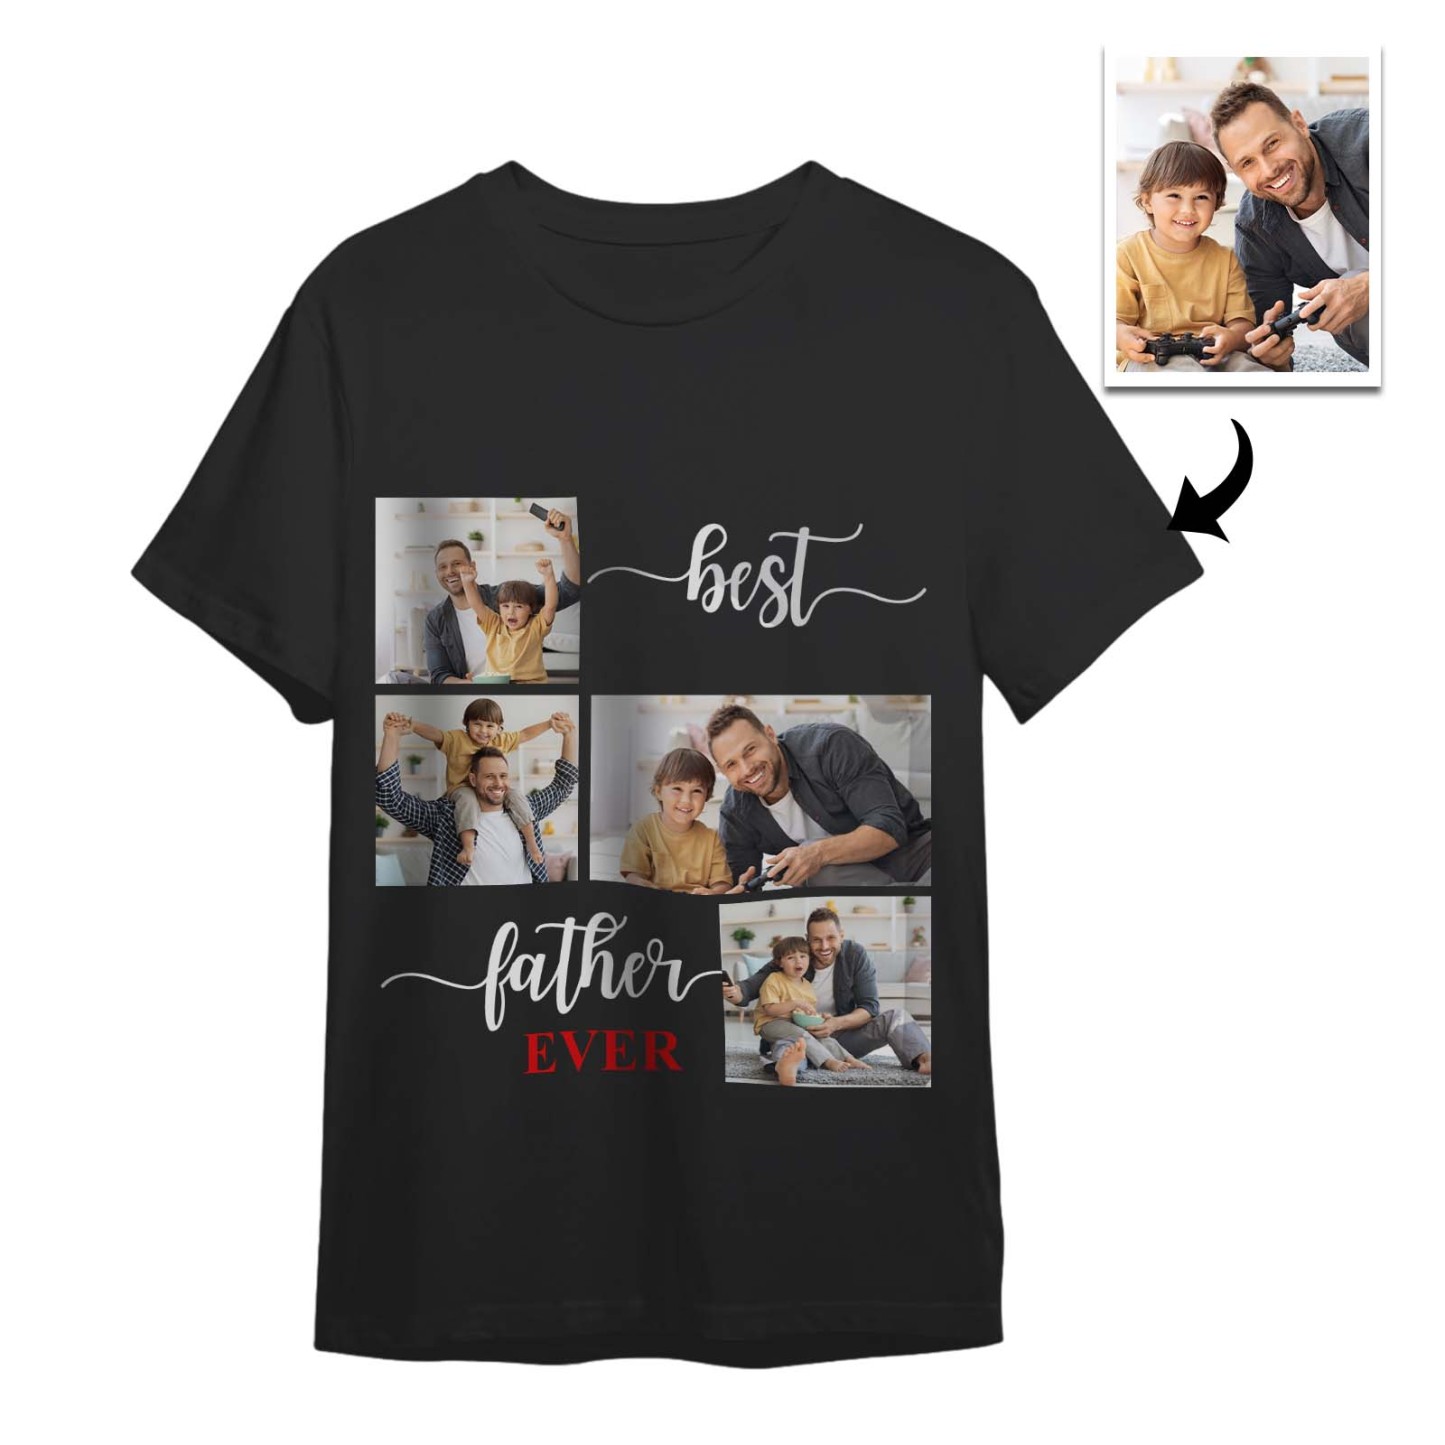 Benutzerdefiniertes 4-fotos-t-shirt, Personalisiertes Foto-t-shirt, Bester Vater Aller Zeiten, Vatertagsgeschenk, Familien-t-shirt - FotoSocken